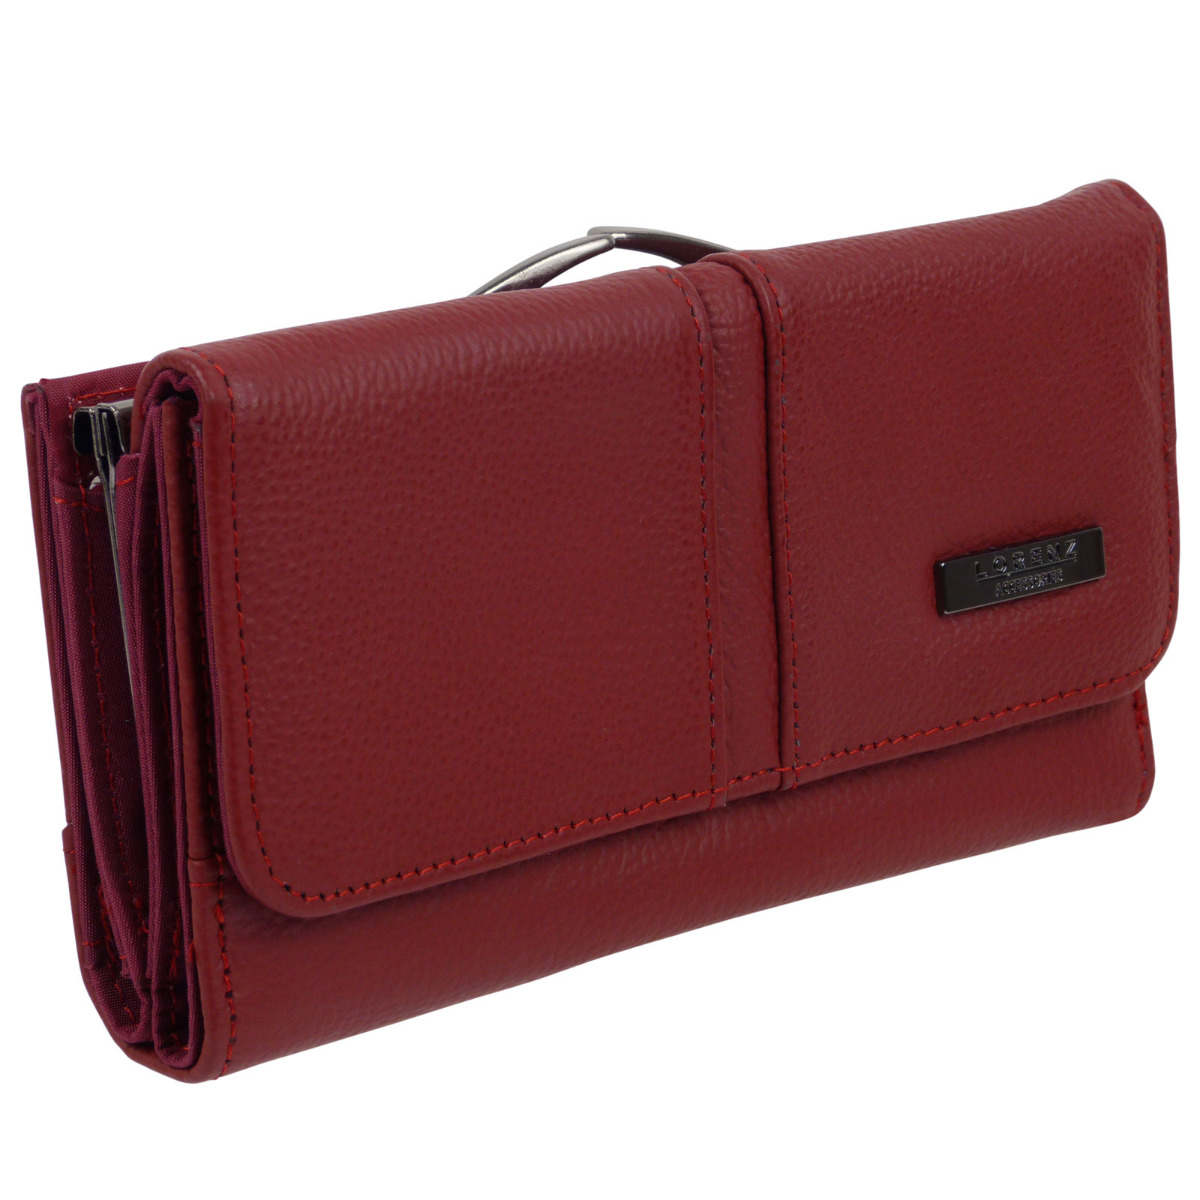 Lorenz Ladies Leather Purse/Wallet Multiple Slots | eBay